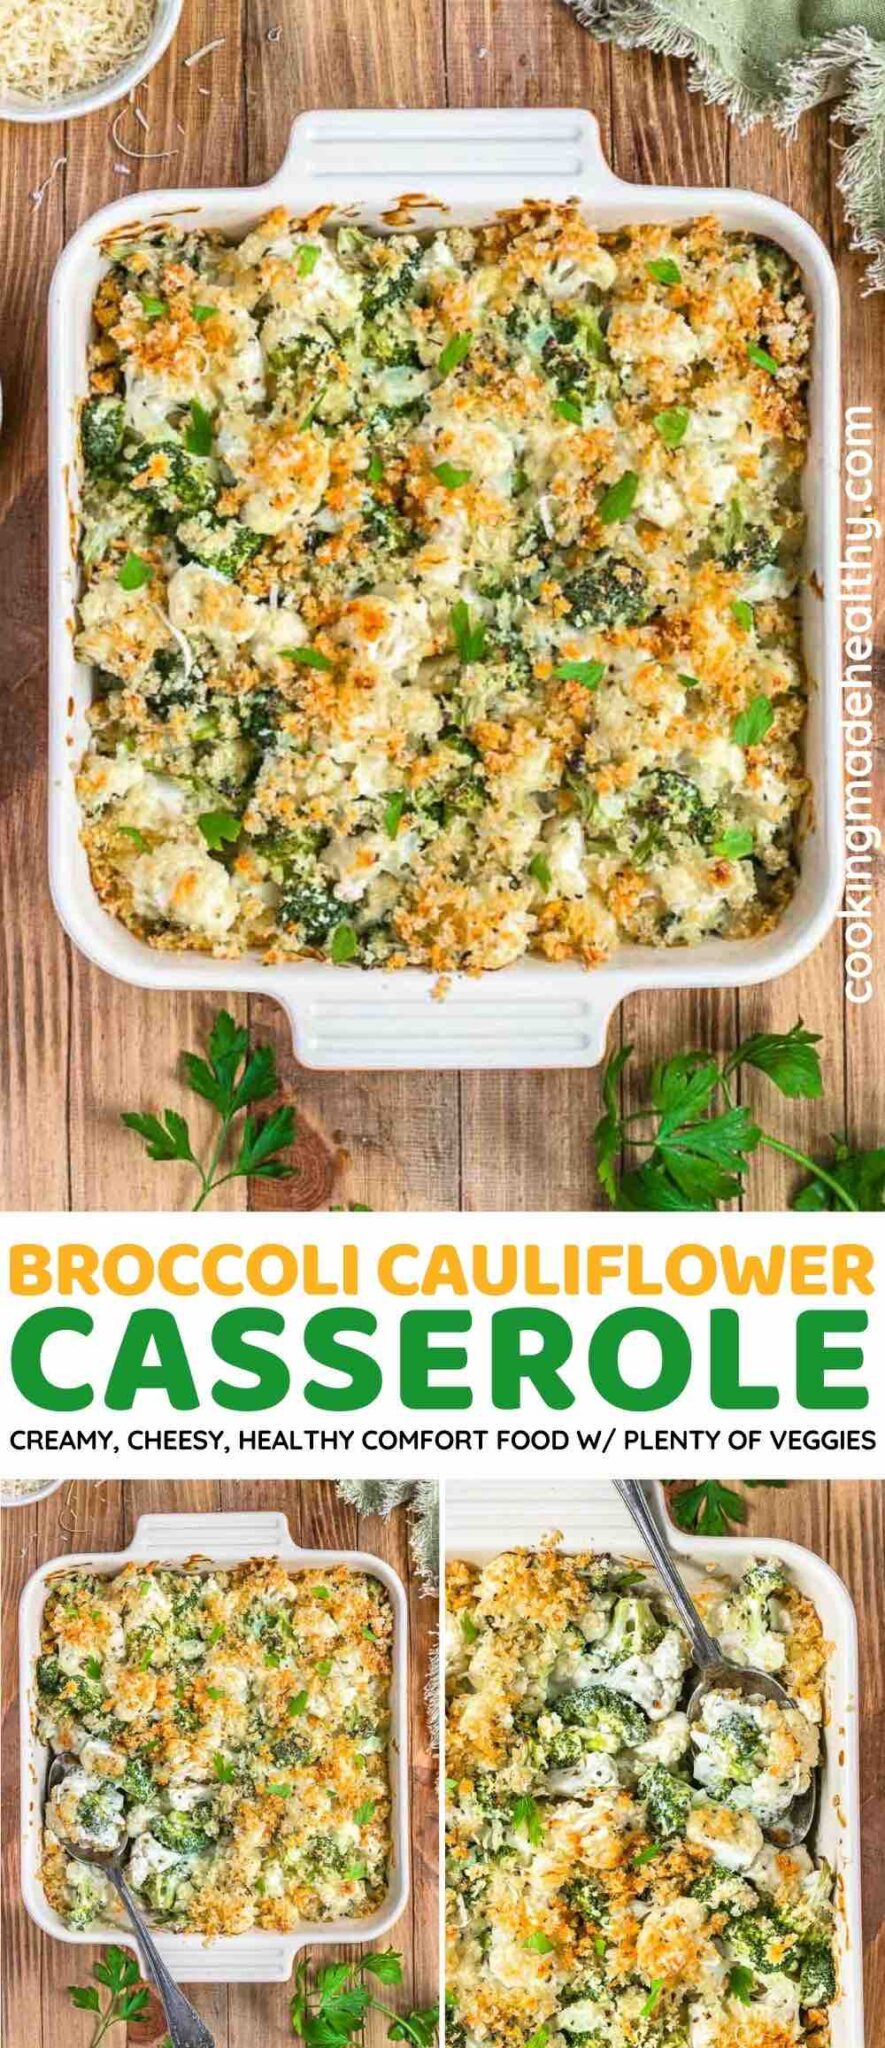 Broccoli Cauliflower Casserole Recipe - Cooking Made Healthy